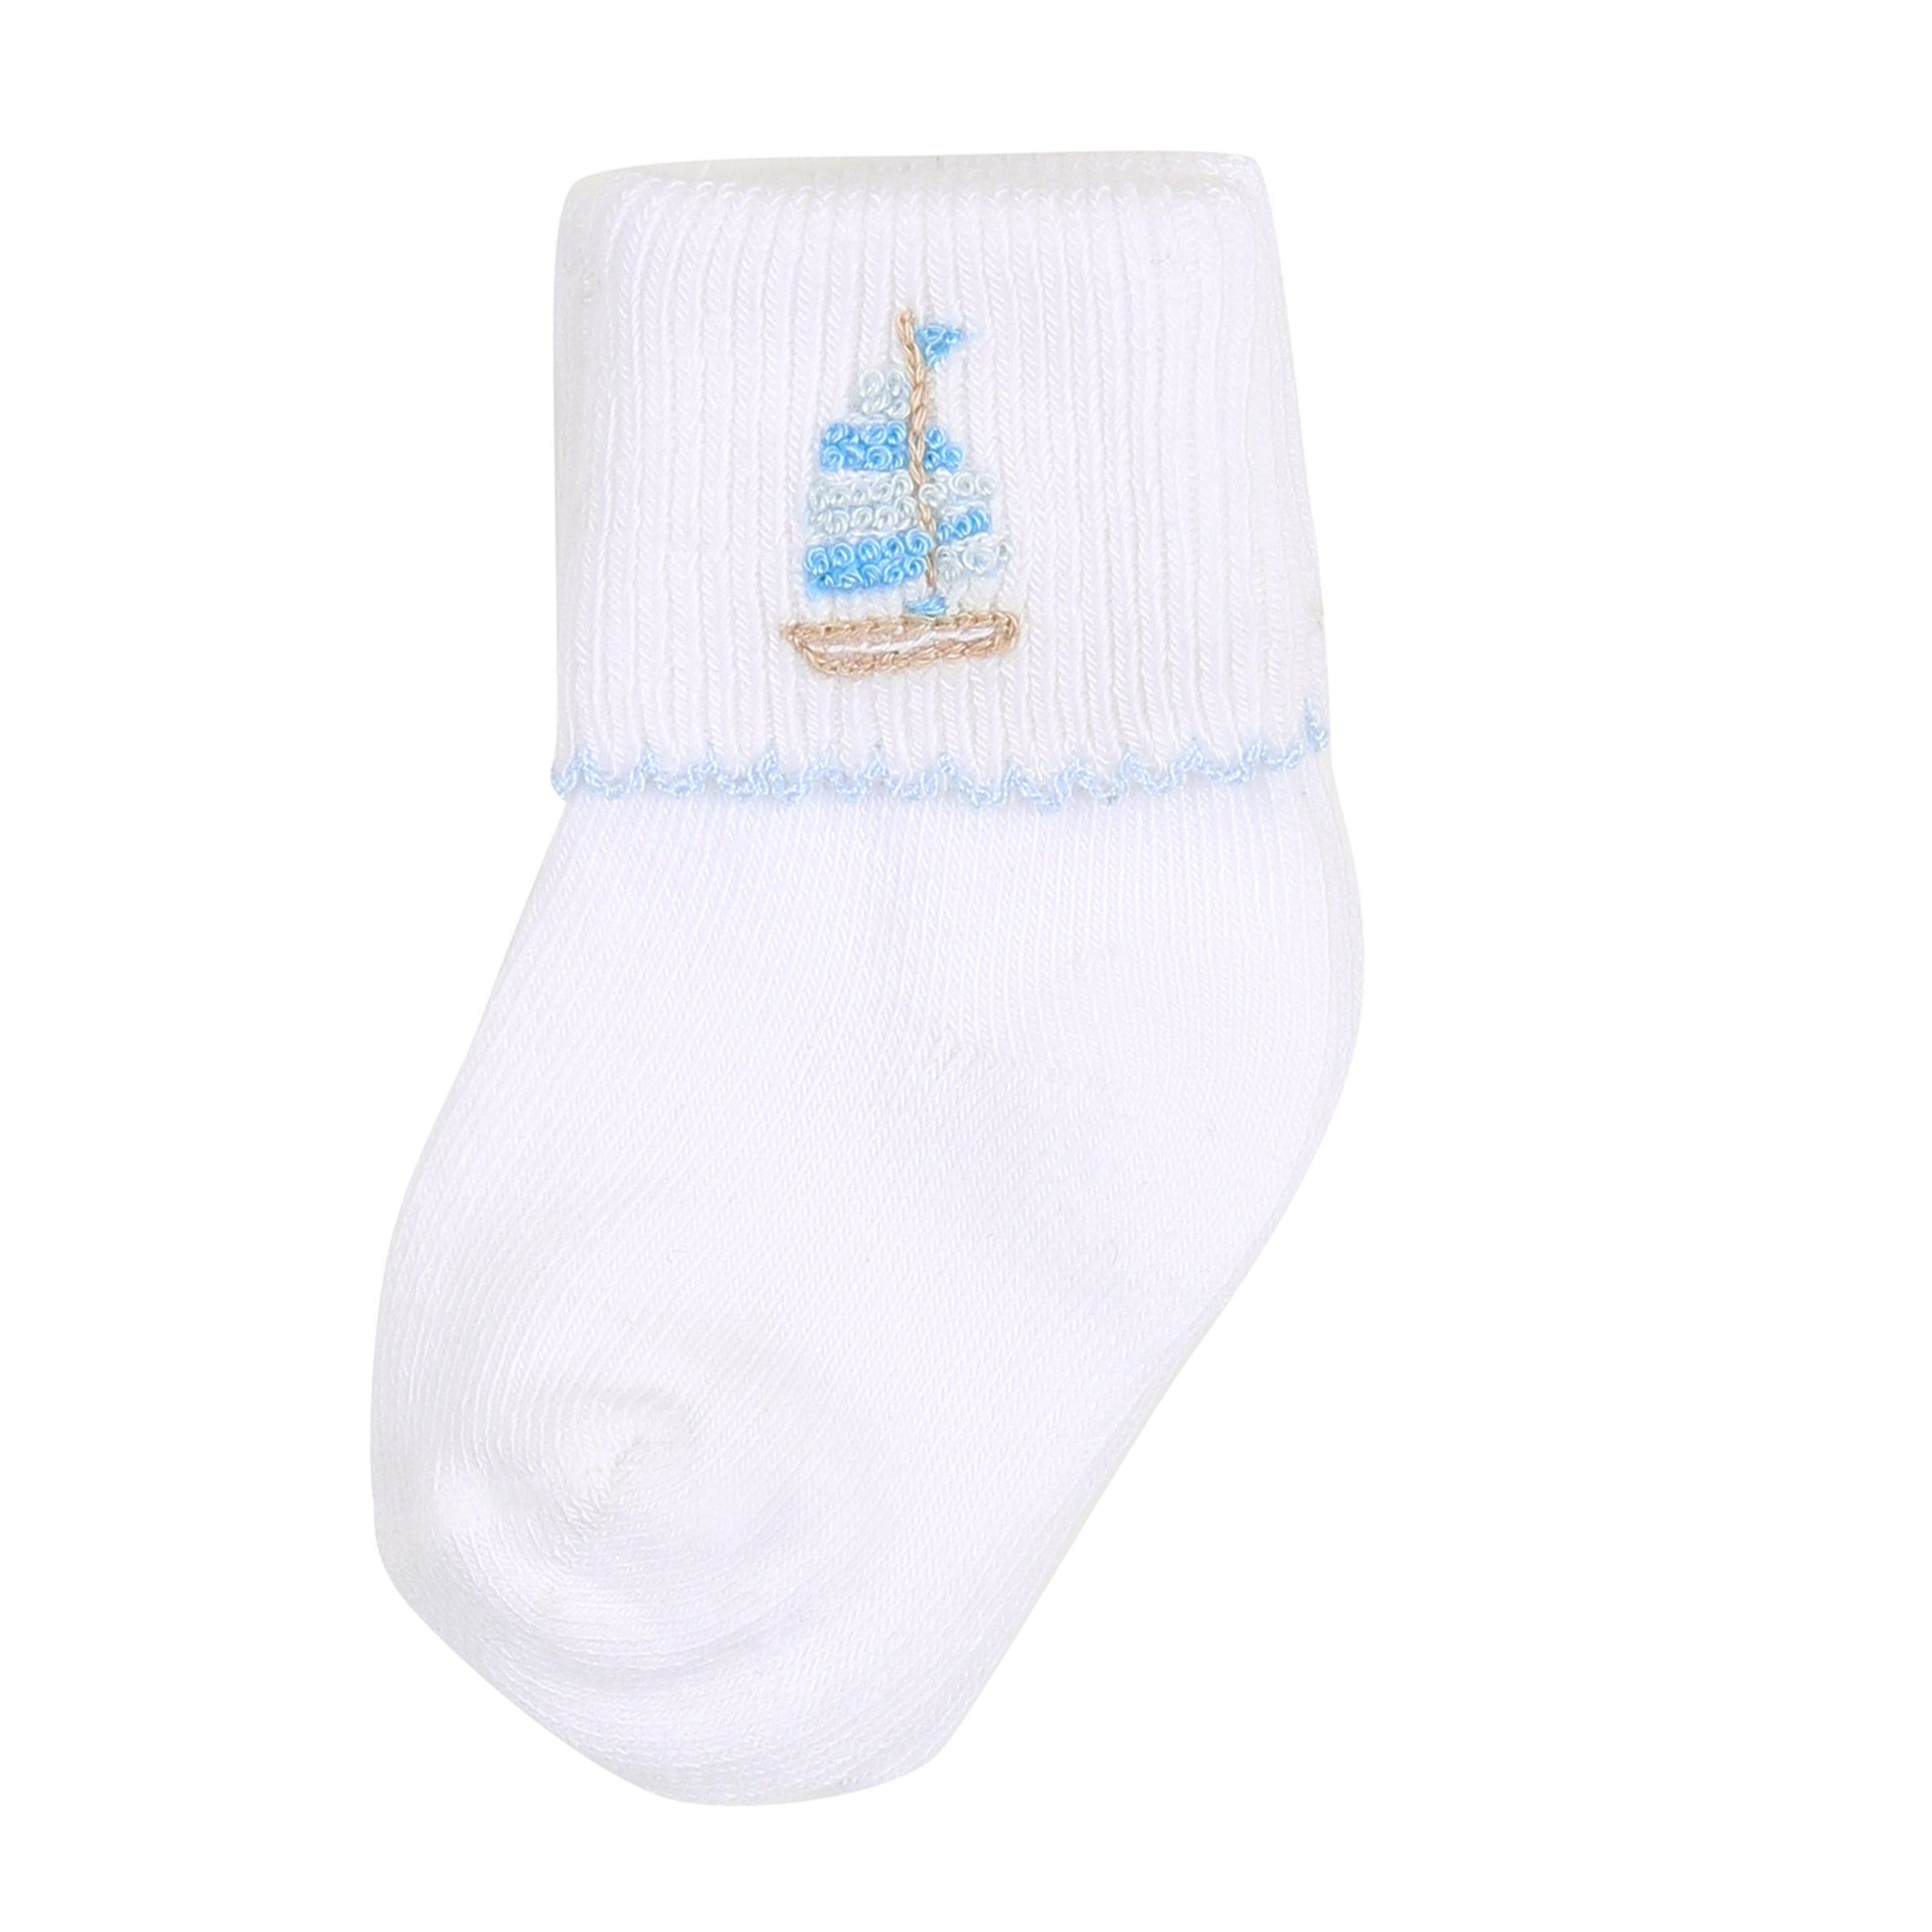 MAGNOLIA BABY - Tiny Sailboat Embroidered Socks - White